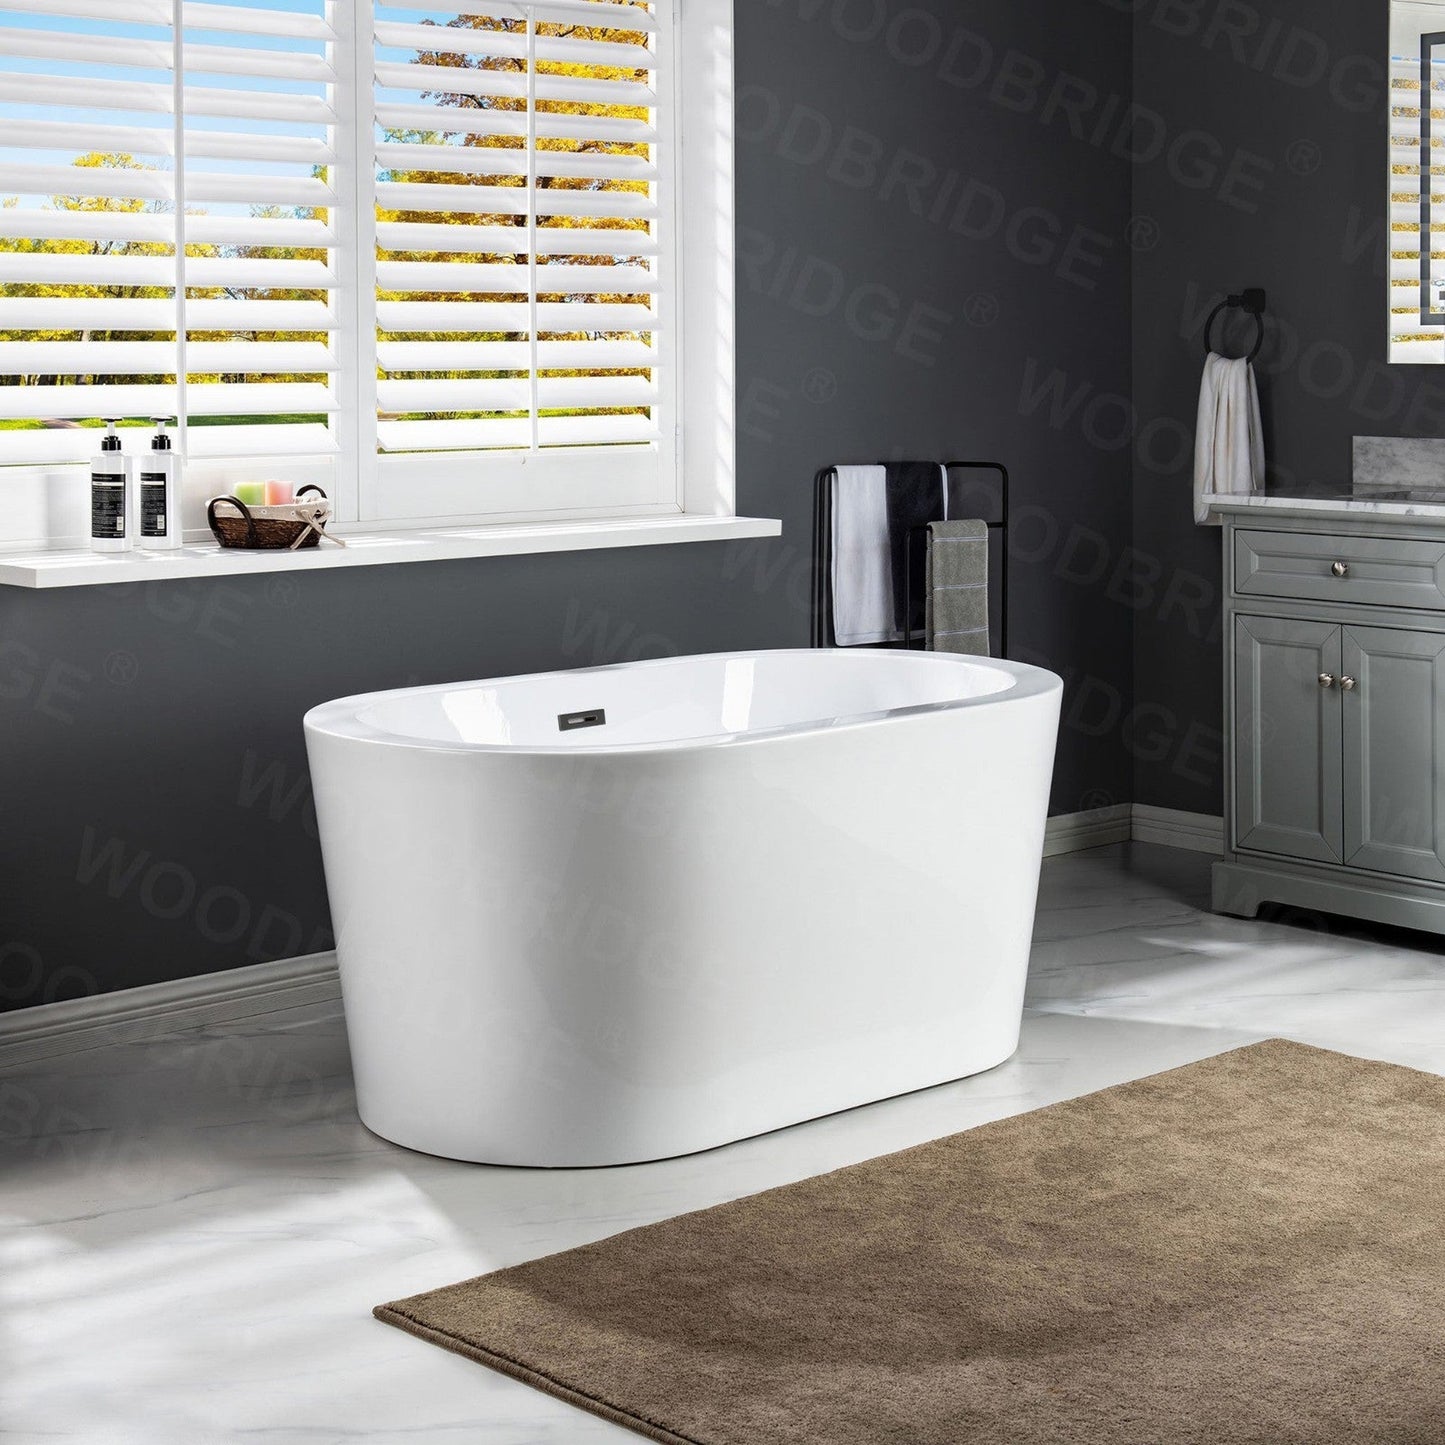 WoodBridge BTA0088 56" White Acrylic Freestanding Soaking Bathtub With Matte Black Drain, Overflow, F0072MBVT Tub Filler and Caddy Tray